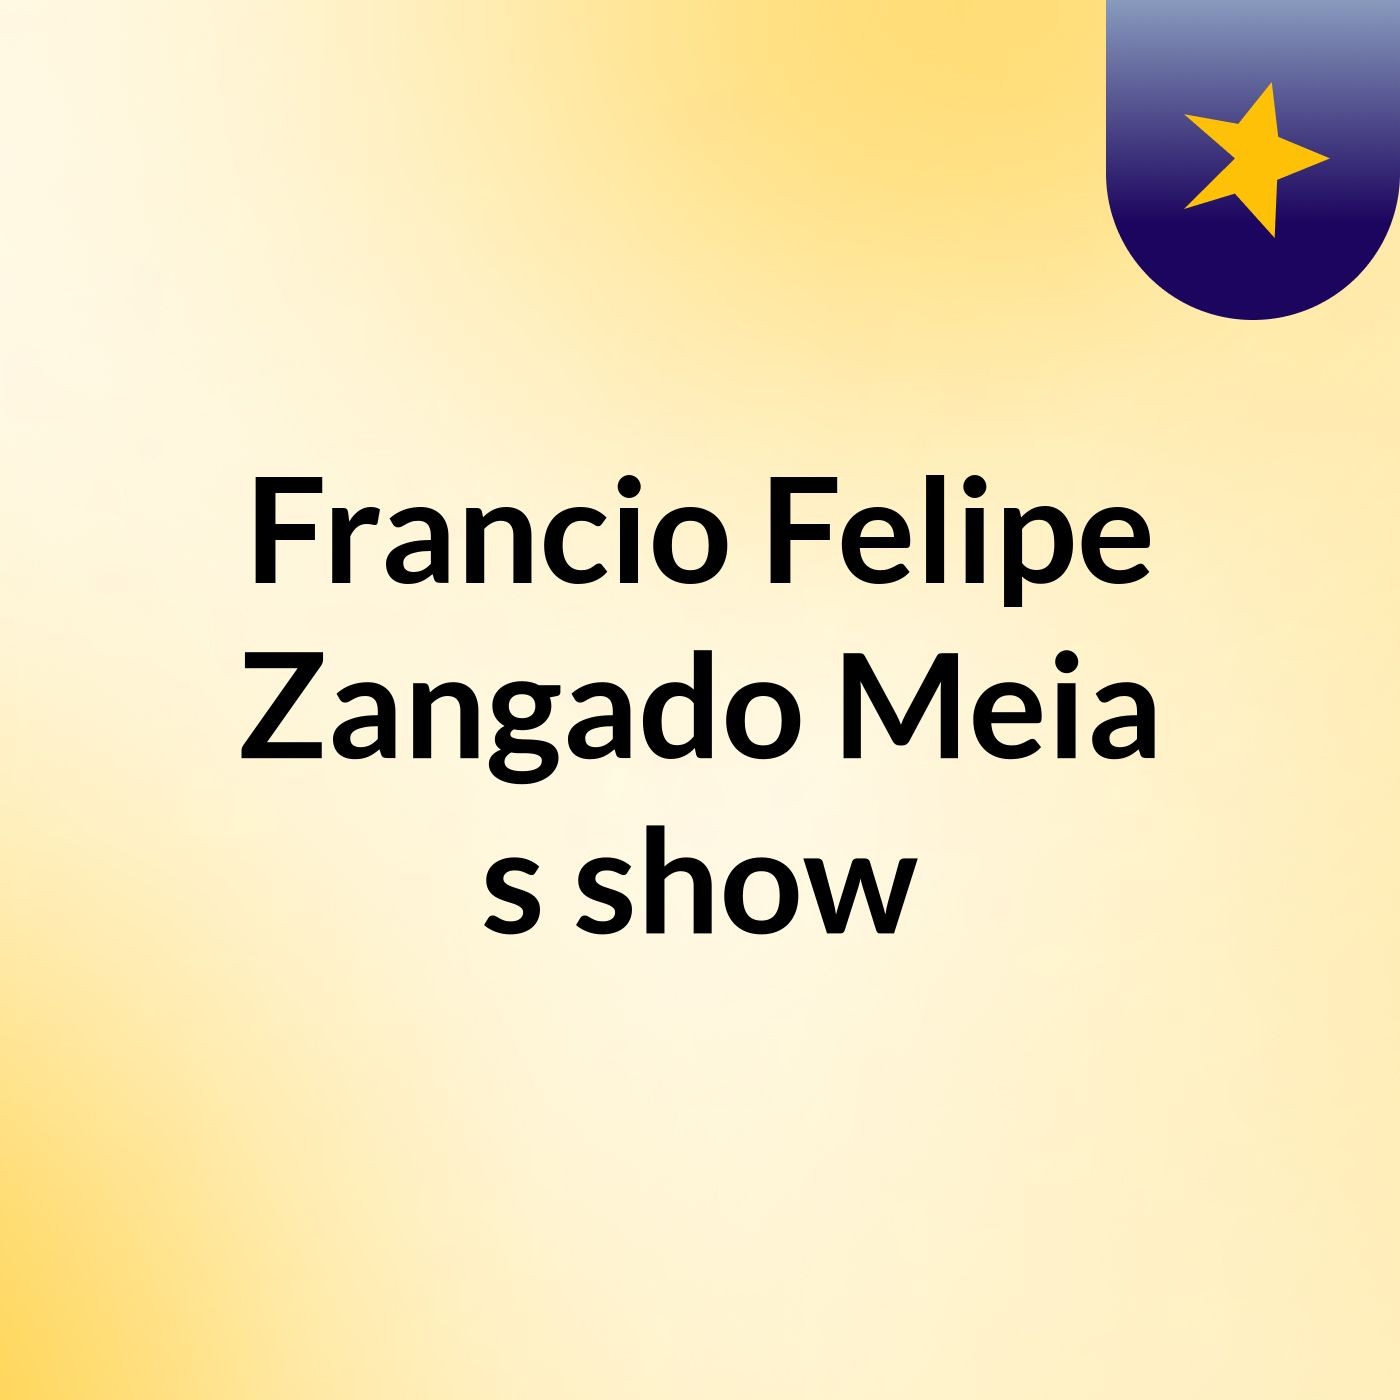 Francio Felipe Zangado Meia's show